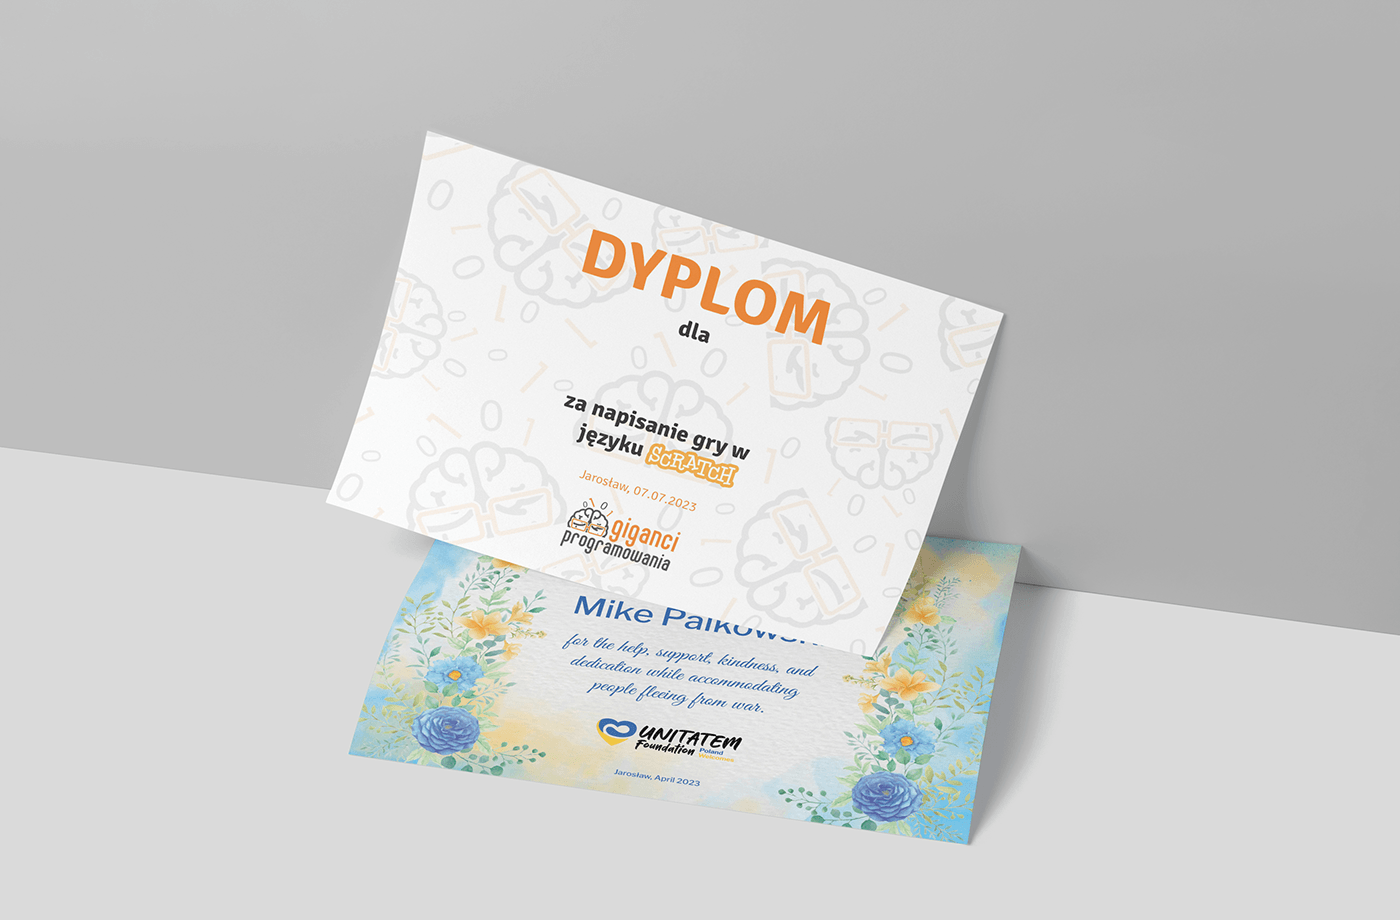 certificate diploma award achievement certificate design certification certificate template design dyplom